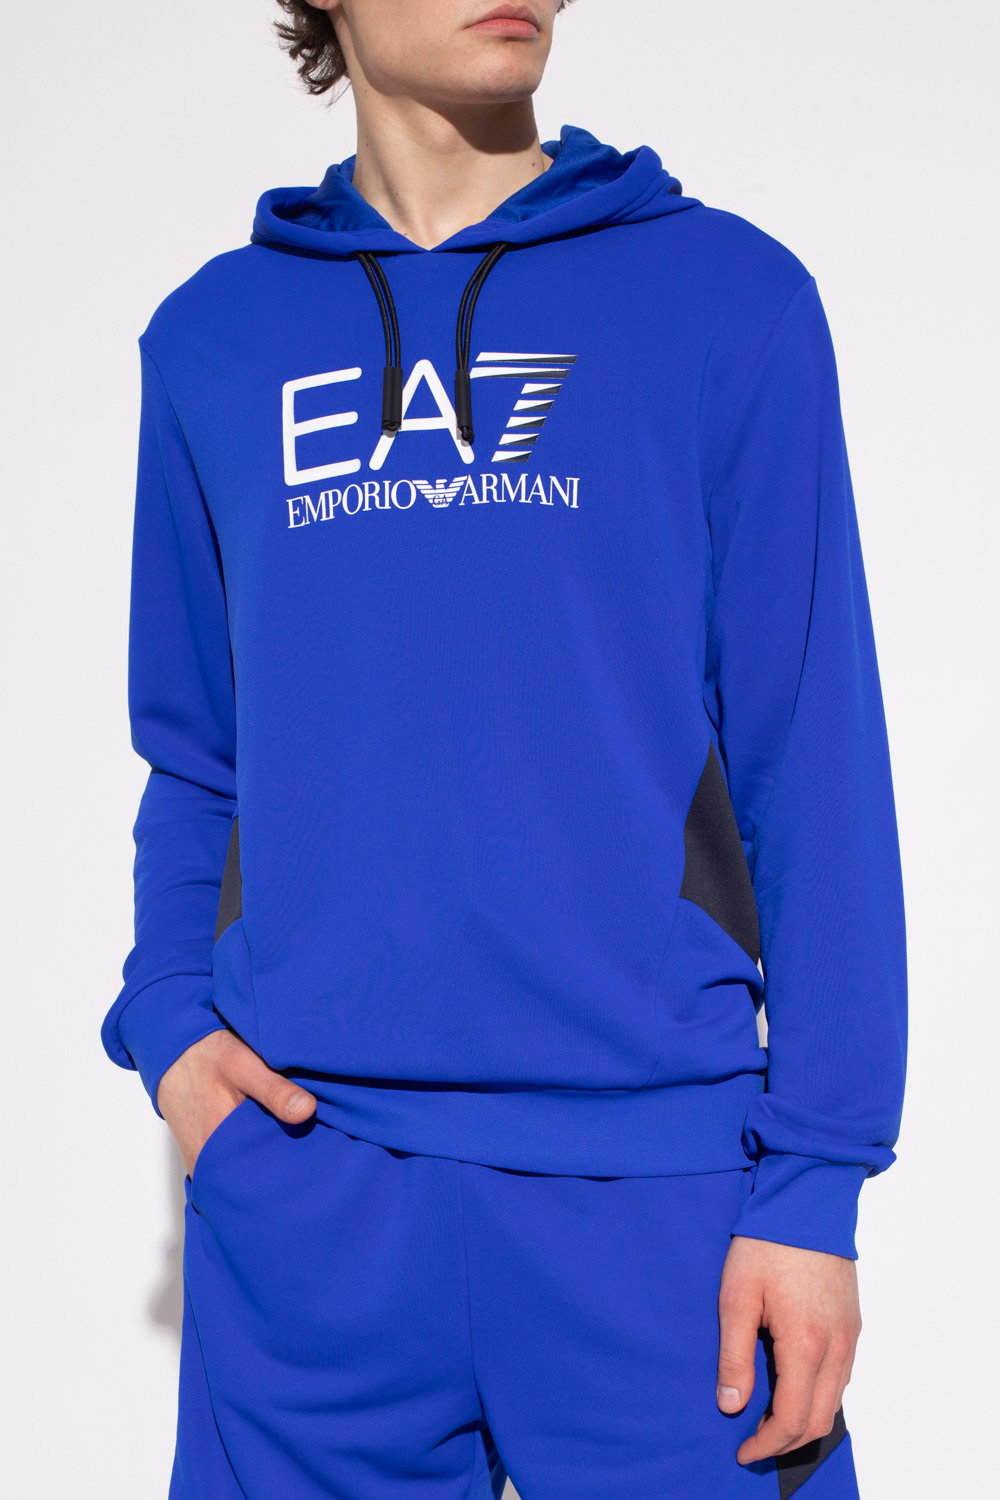 EA7 Emporio Armani Emporio Armani Loungewear Lot de 2 t-shirts col V confort avec logo Blanc et bleu marine